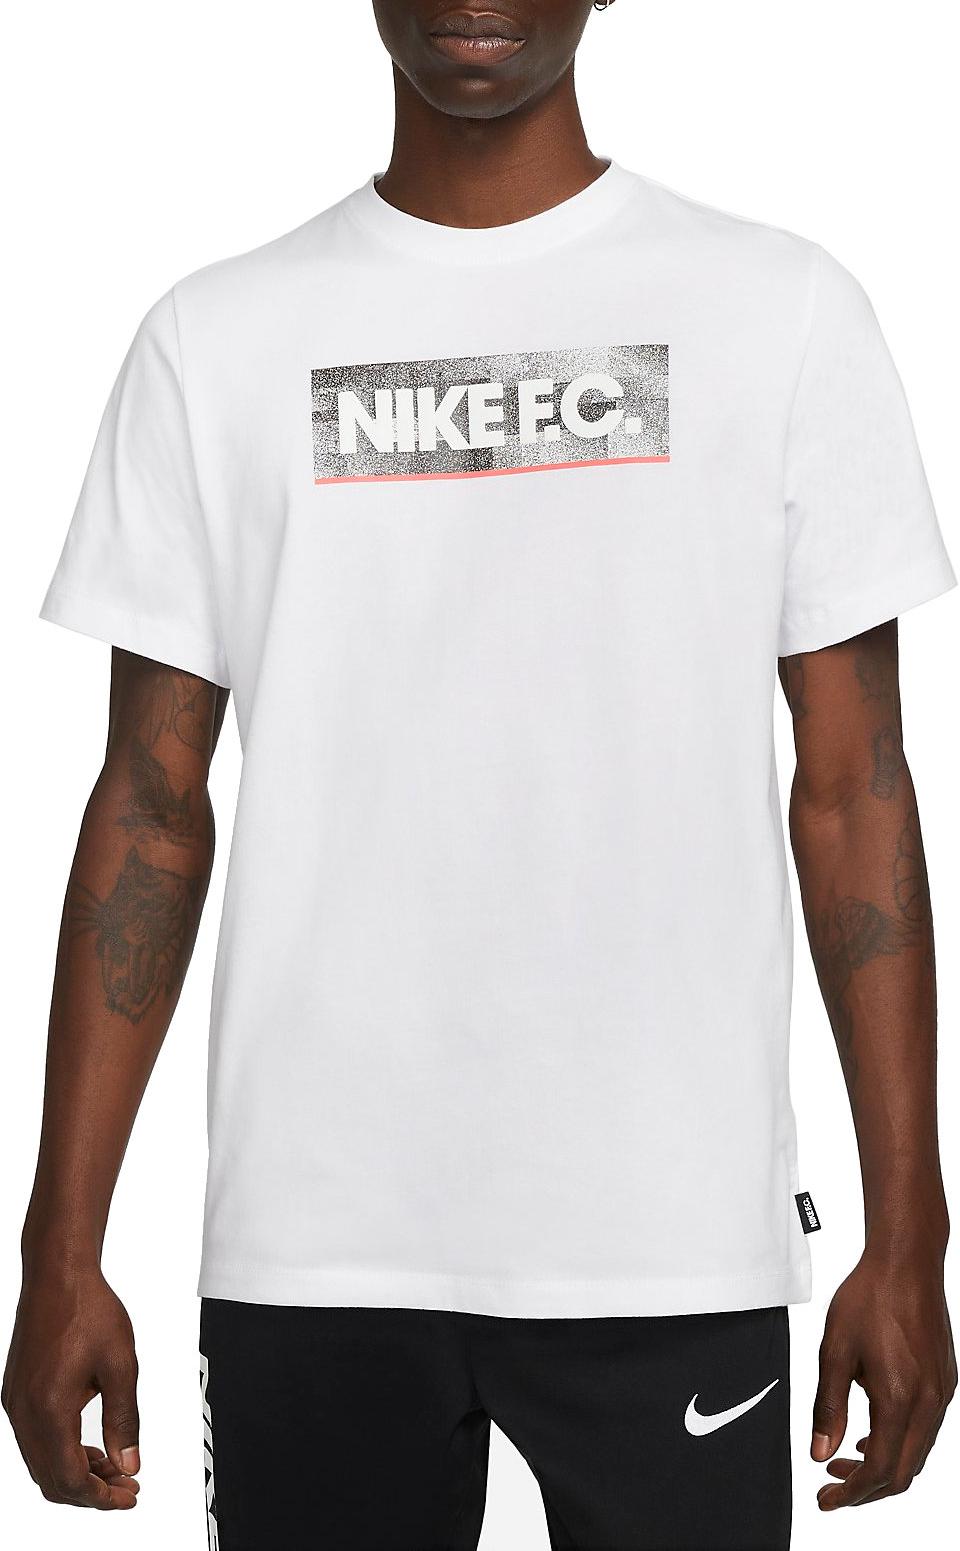 Tussendoortje Bekend moord Nike F.C. T-Shirt - Top4Football.com